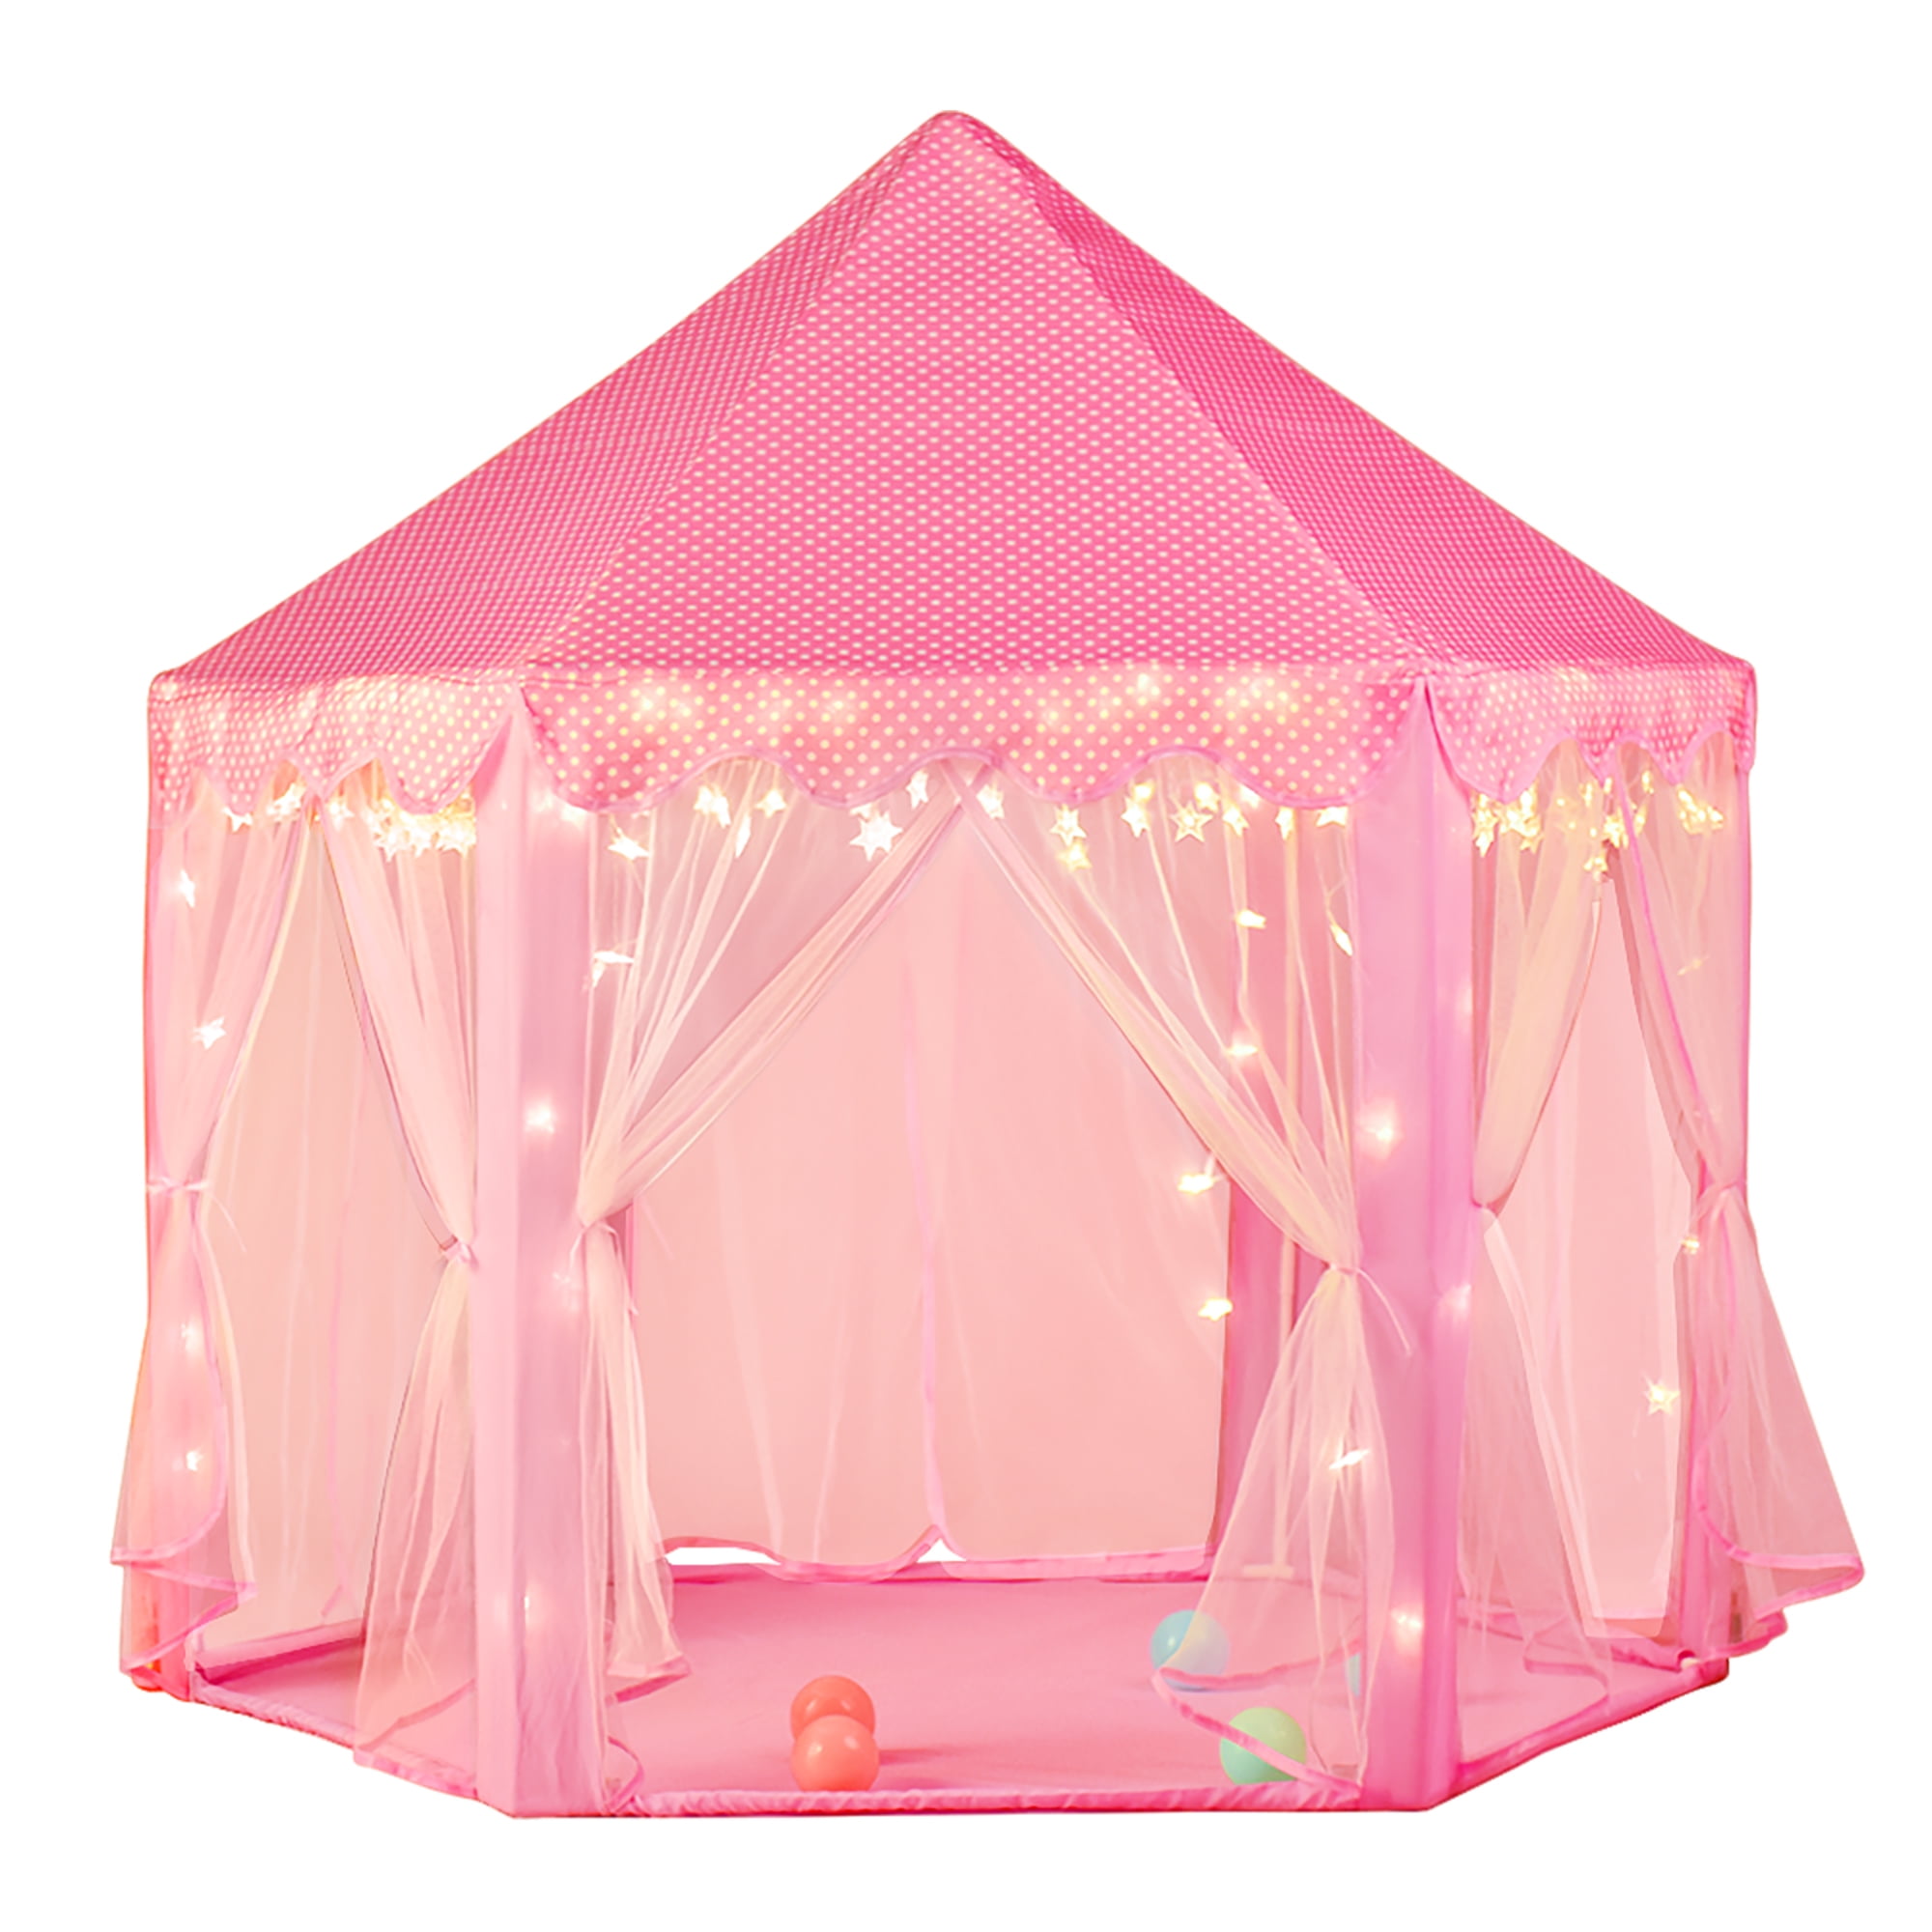 Watnature Kids Play Tent with LED Lights, Princess Castle Tent, Hexagon  Large Playhouse Toys for Children IndoorandOutdoor baokuan - The Home Depot